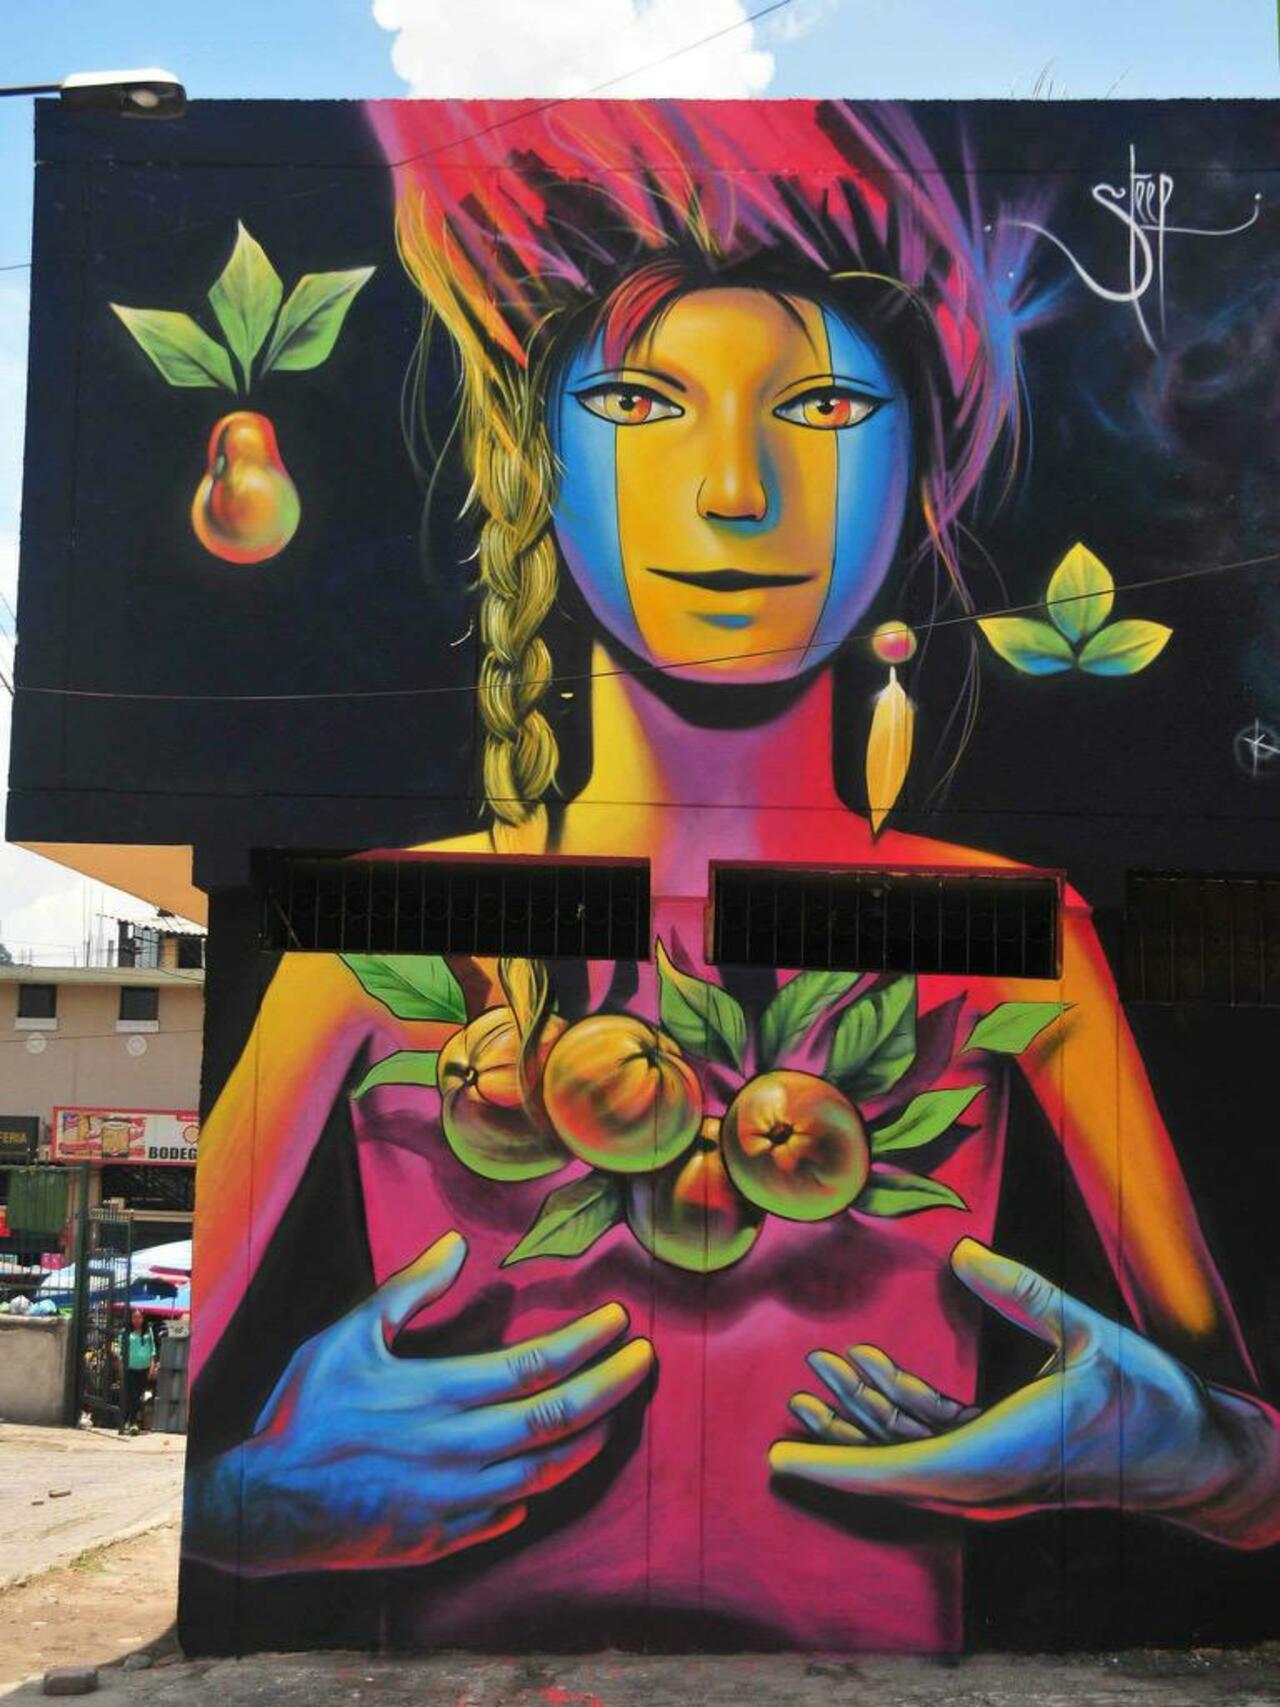 Street Art by Steep #art #graffiti #mural #streetart http://t.co/dKGIfl0HiR http://twitter.com/GoogleStreetArt/status/652717552435638272/photo/1/large?utm_source=fb&utm_medium=fb&utm_campaign=charlesjackso14&utm_content=652720469402103808 … … … … http://twitter.com/charlesjackso14/status/652728507609542656